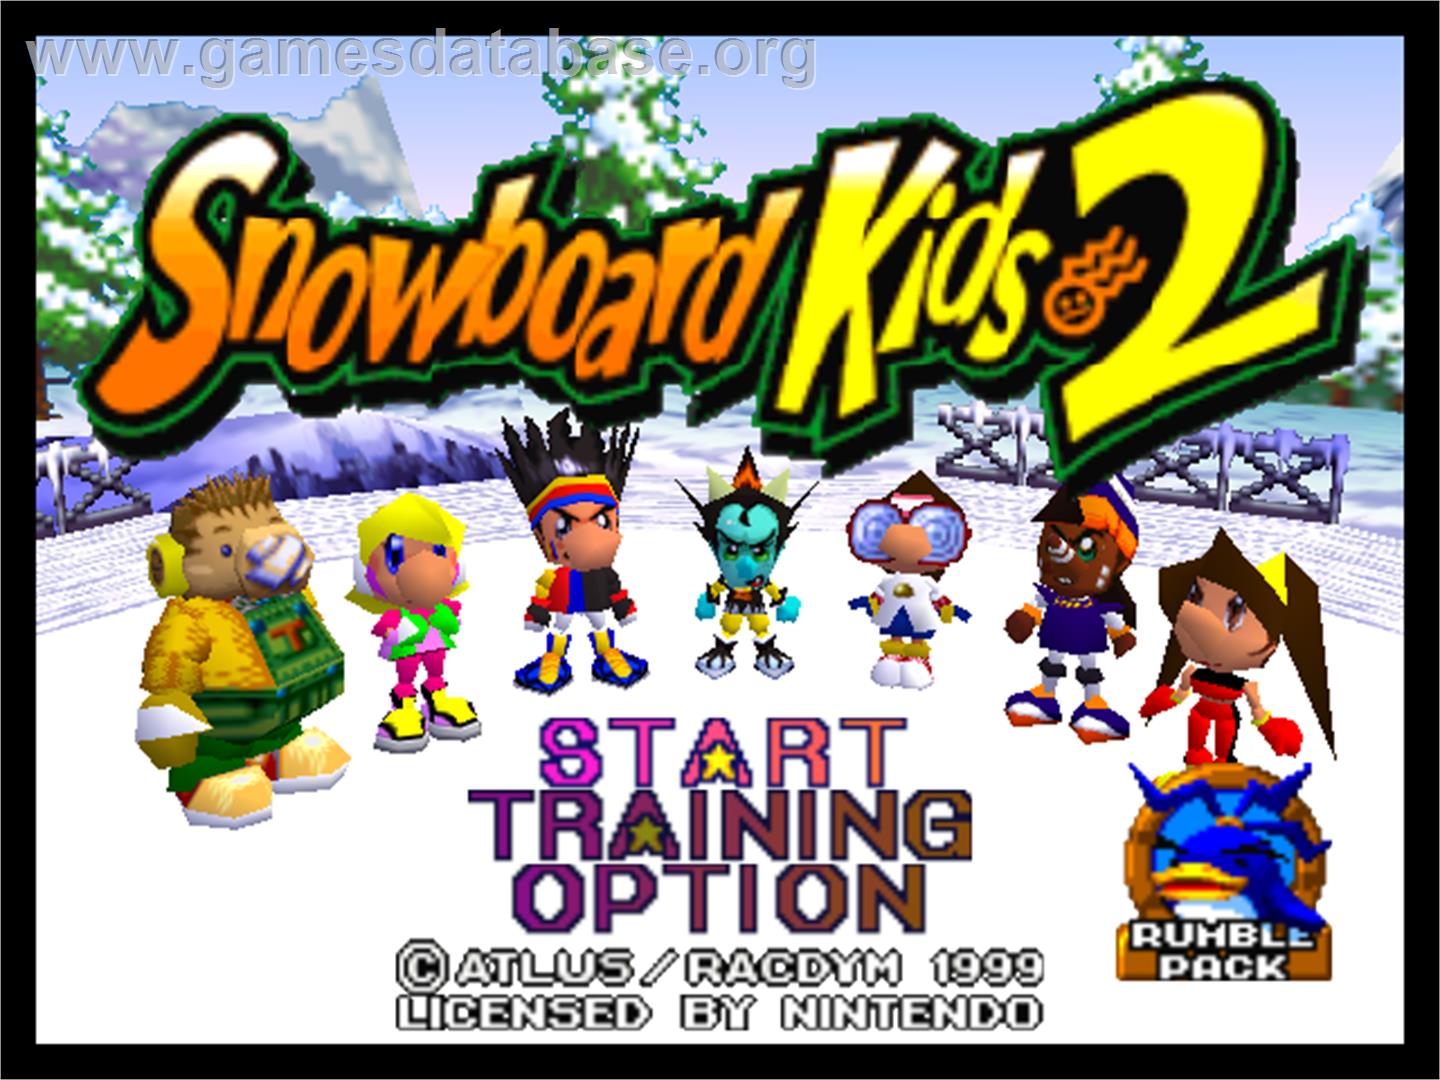 Snowboard Kids 2 - Nintendo N64 - Artwork - Title Screen